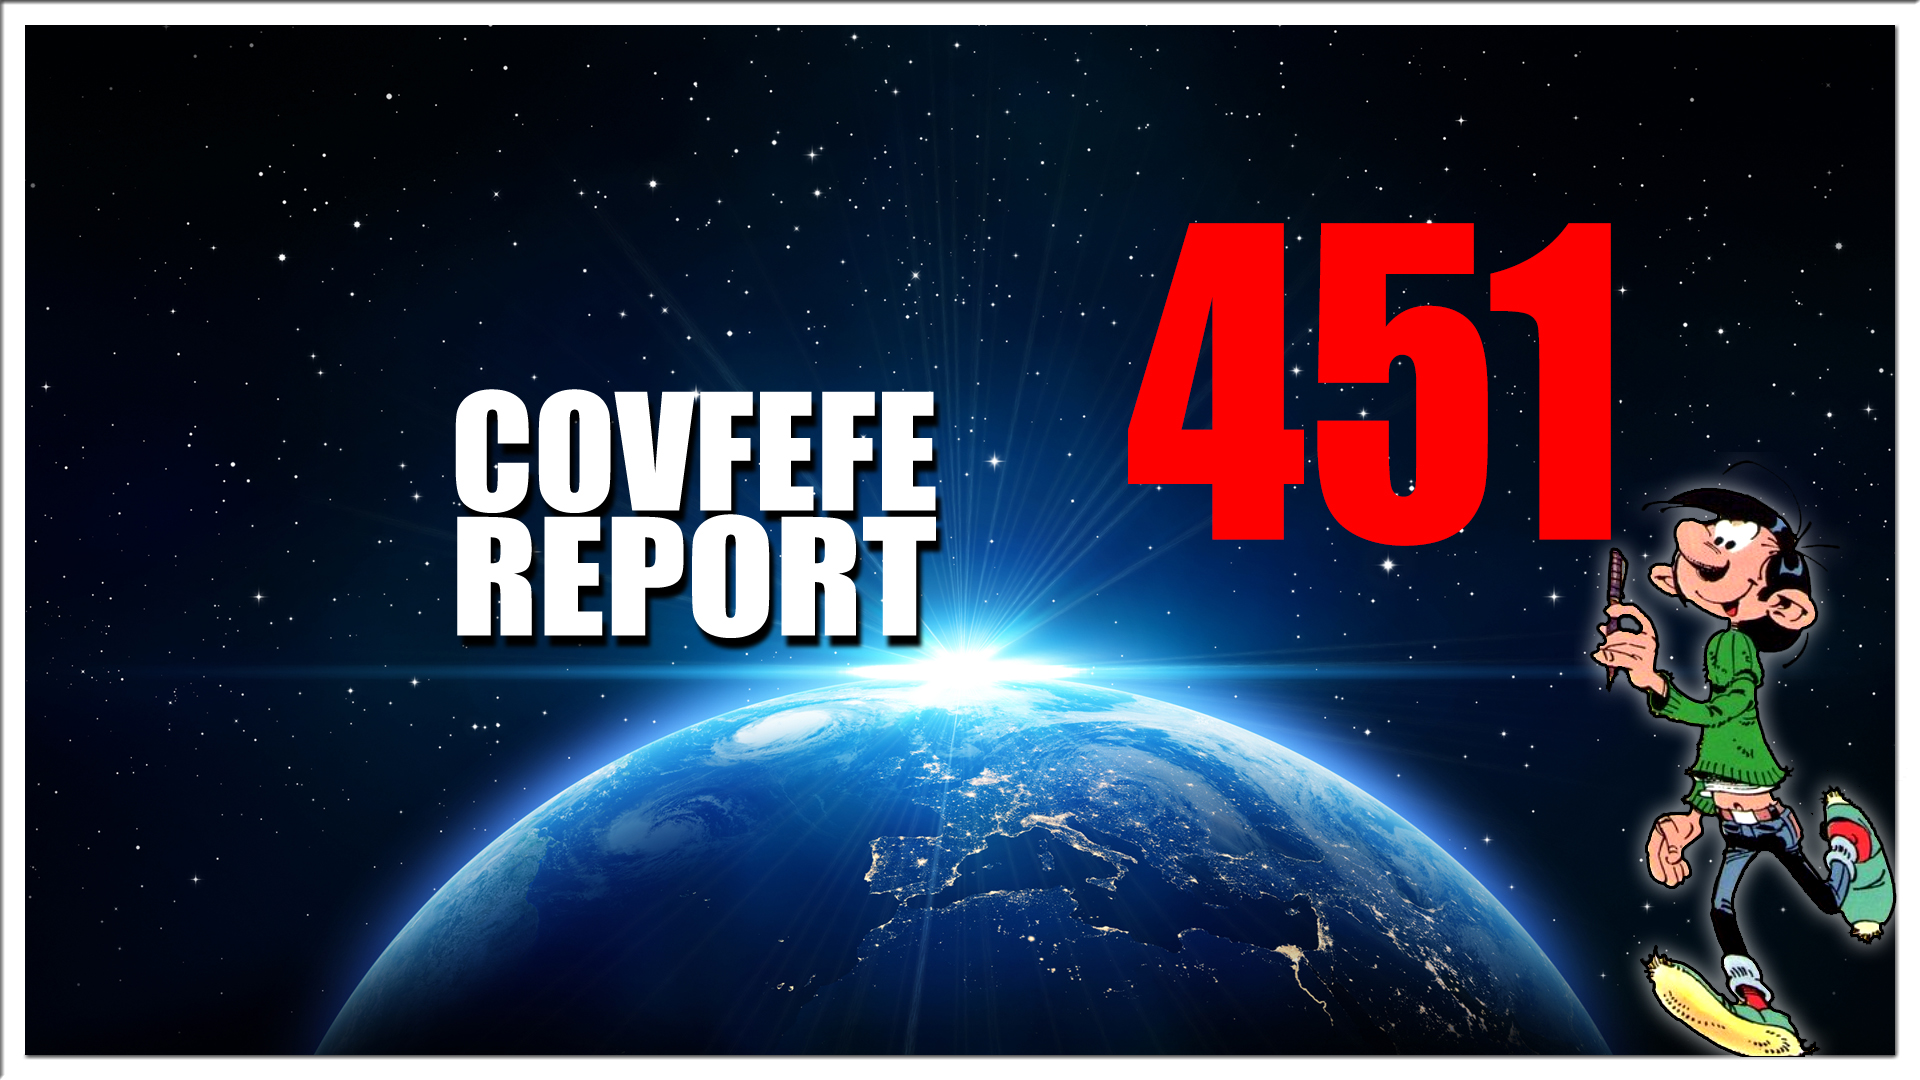 Covfefe Report 451. Patriots are in control, Terugblik Barneveld, World Wide Demo 15 mei, Wij gaan dansen